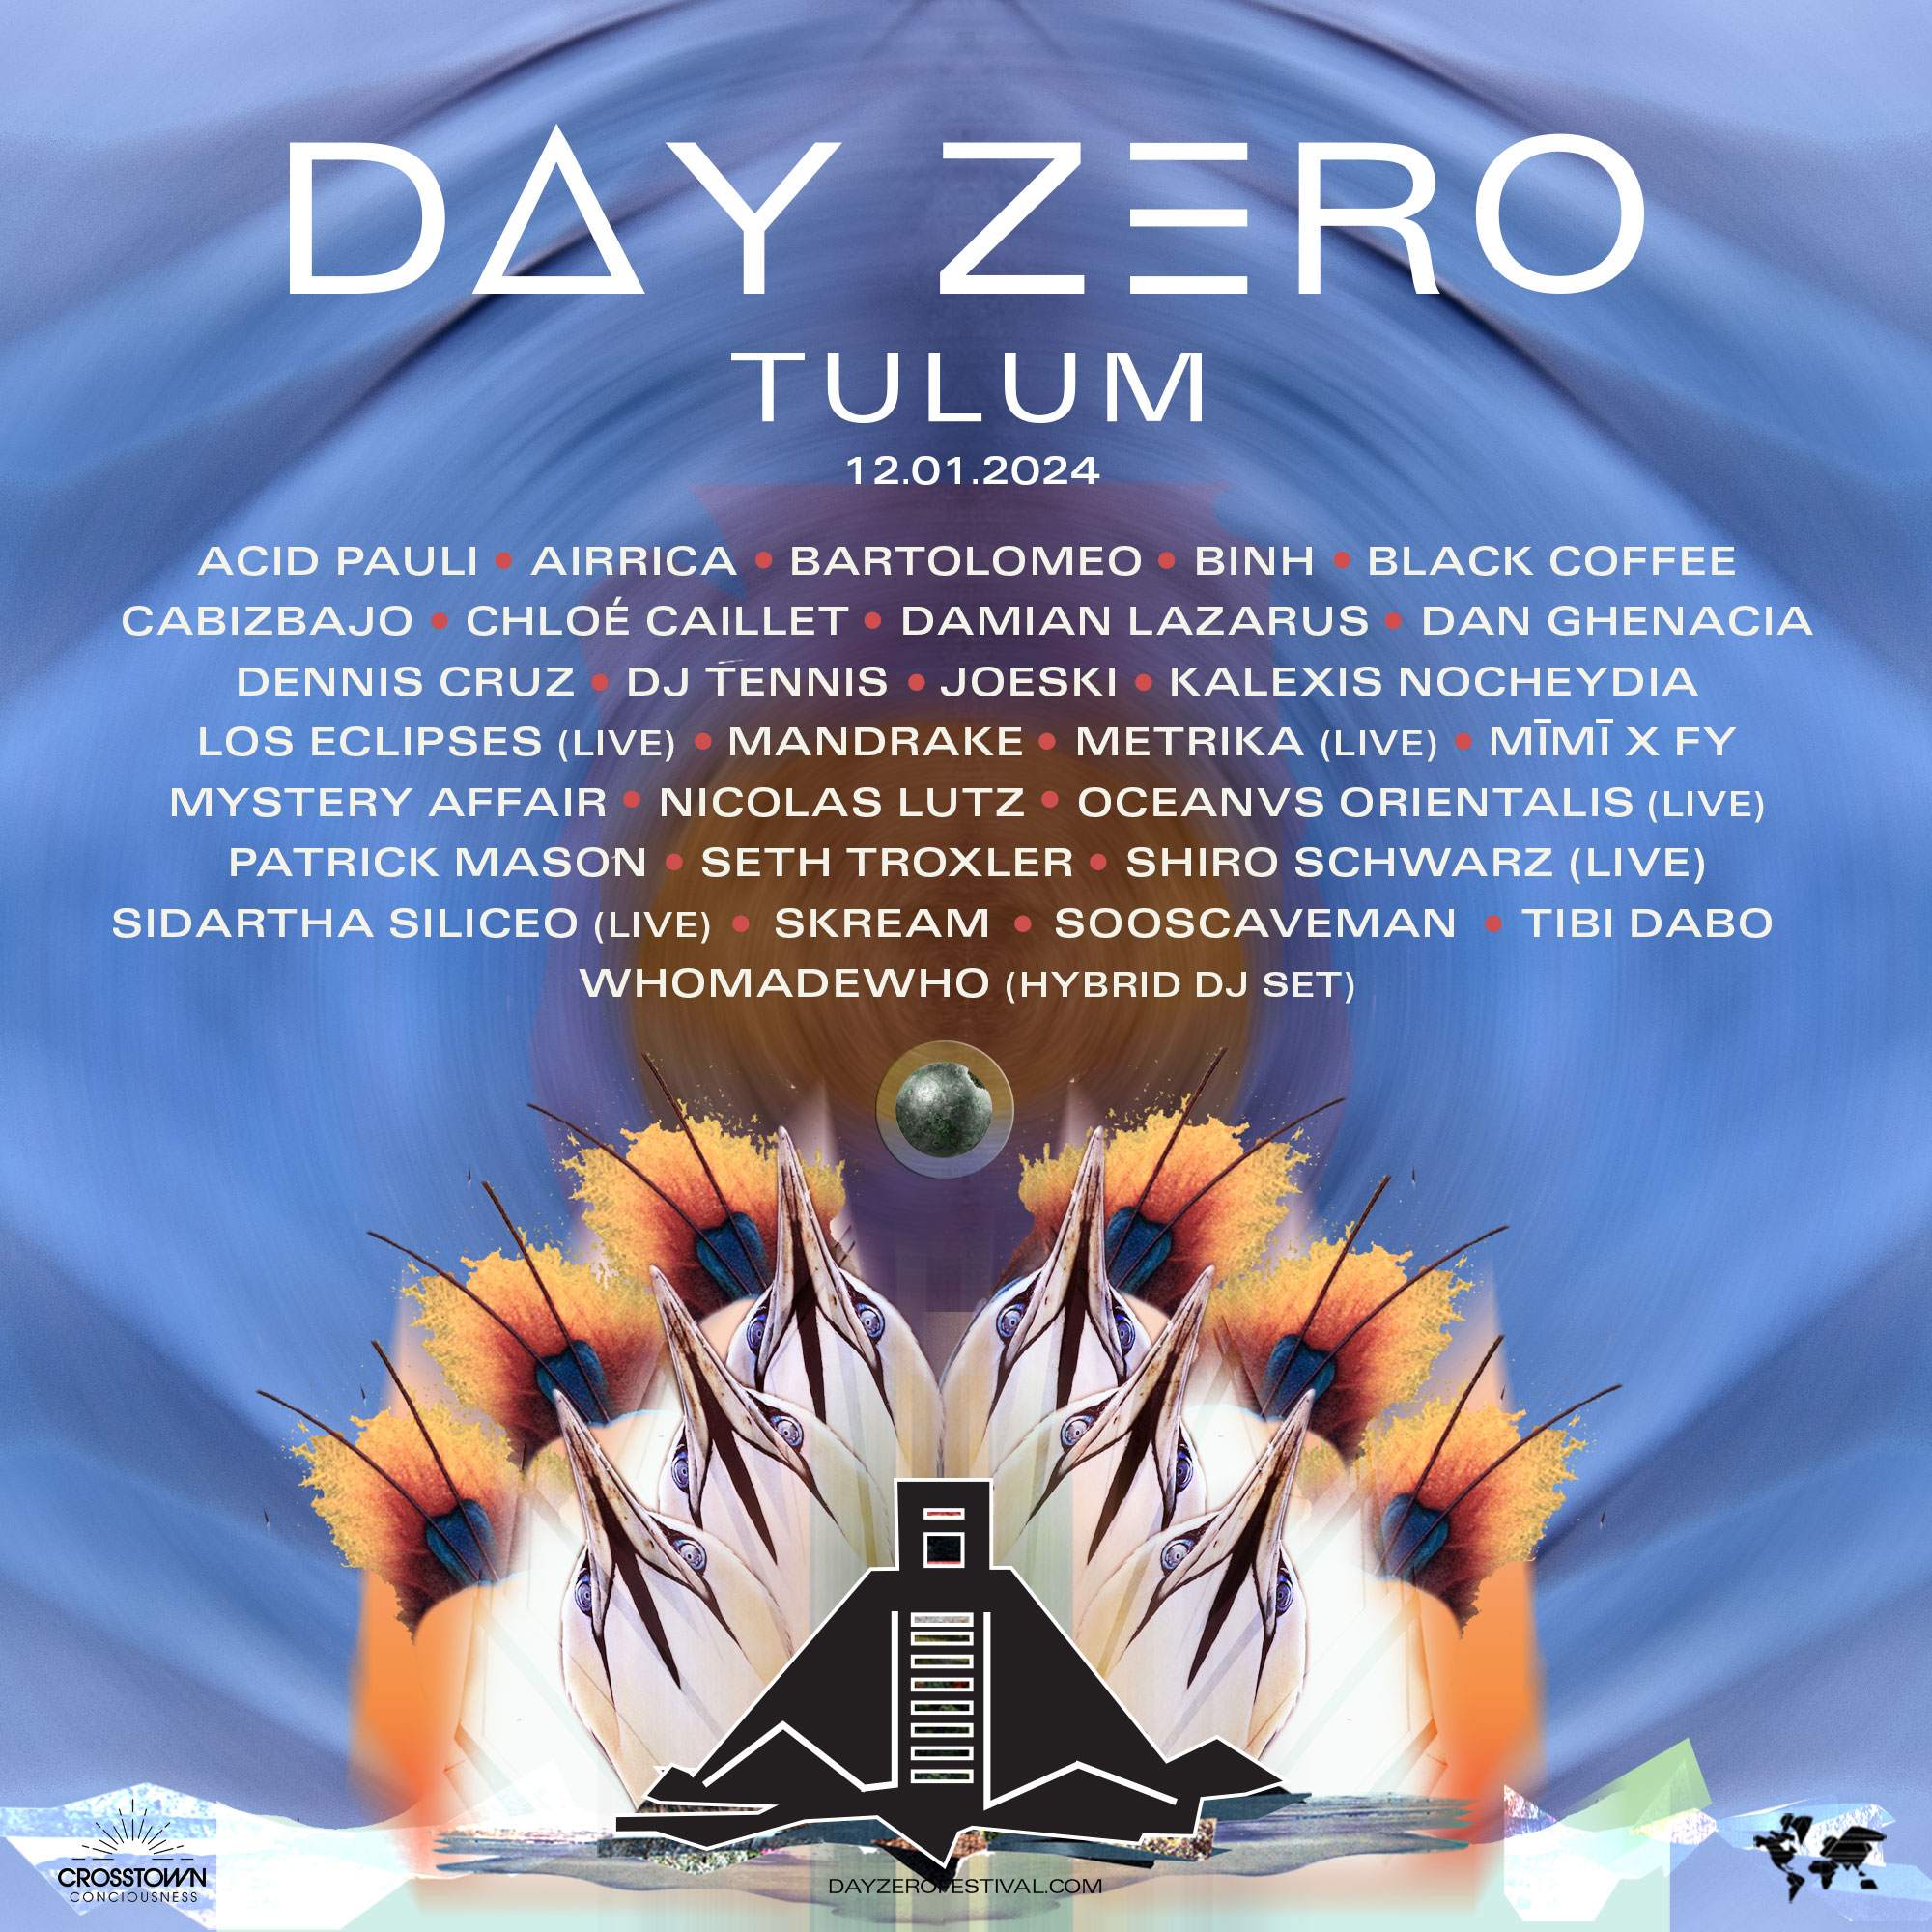 Day Zero Tulum 2024 - フライヤー裏